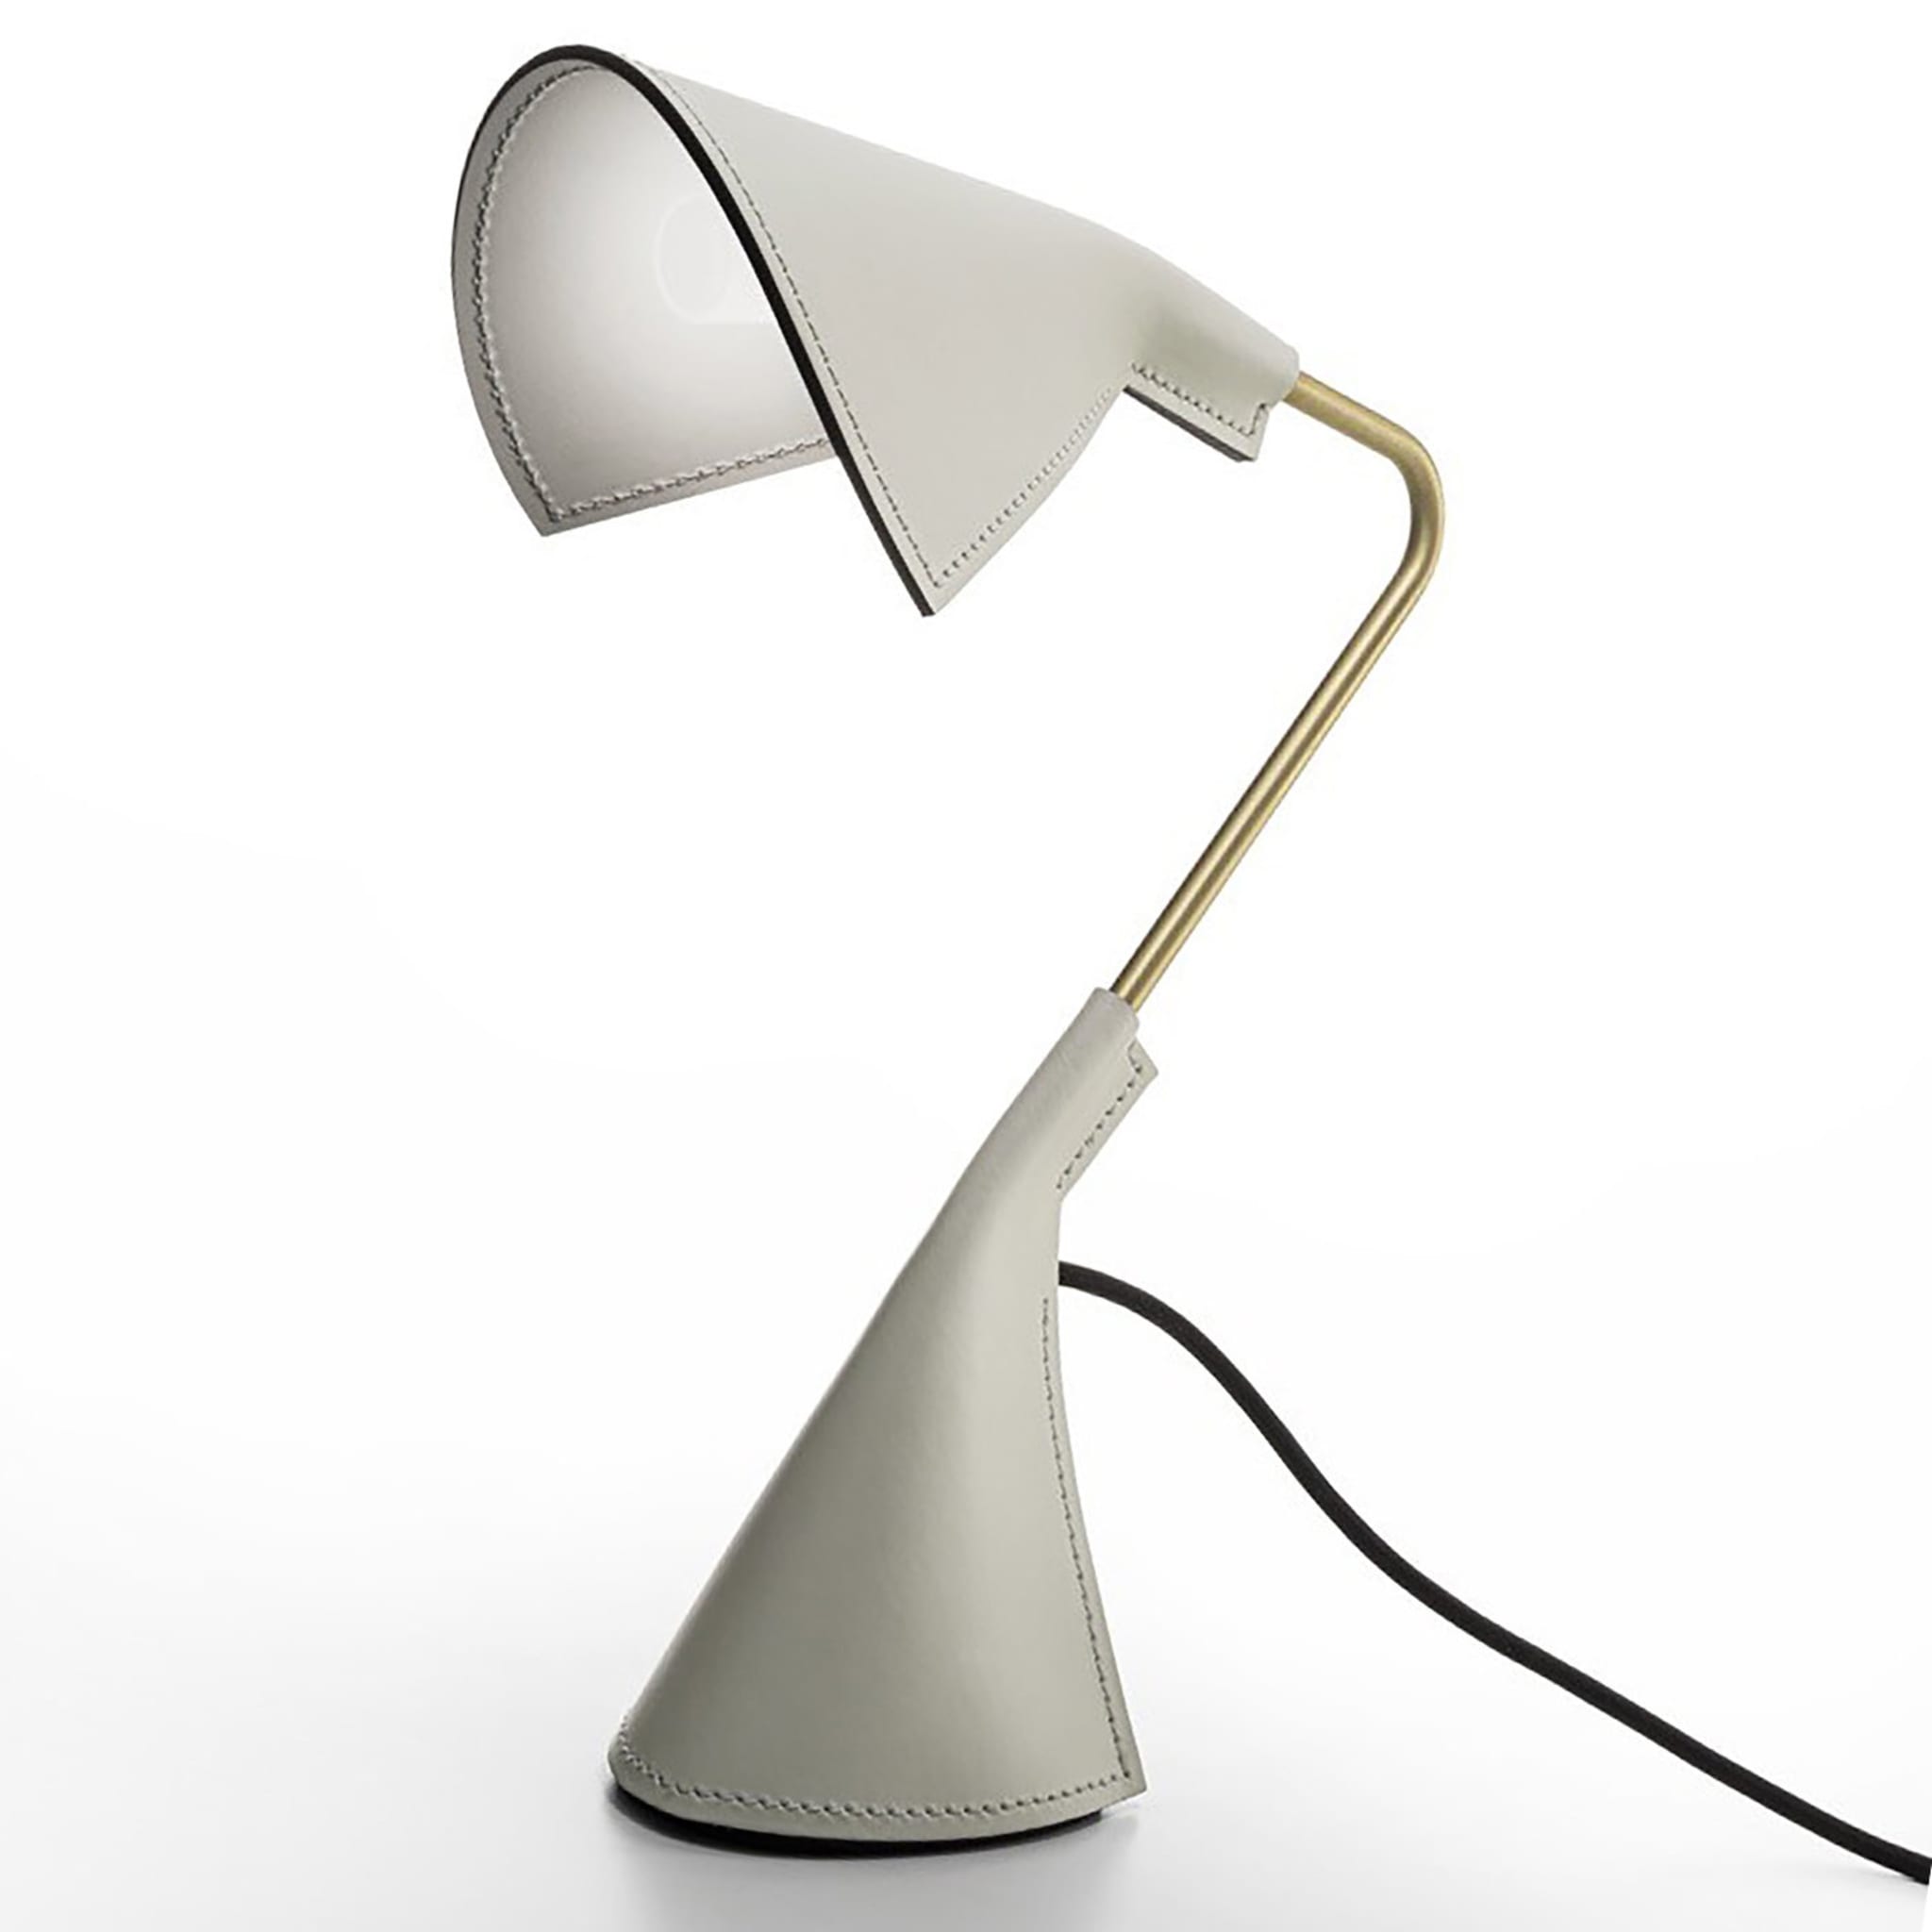 Duffy White Desk Lamp #1 - Alternative view 1